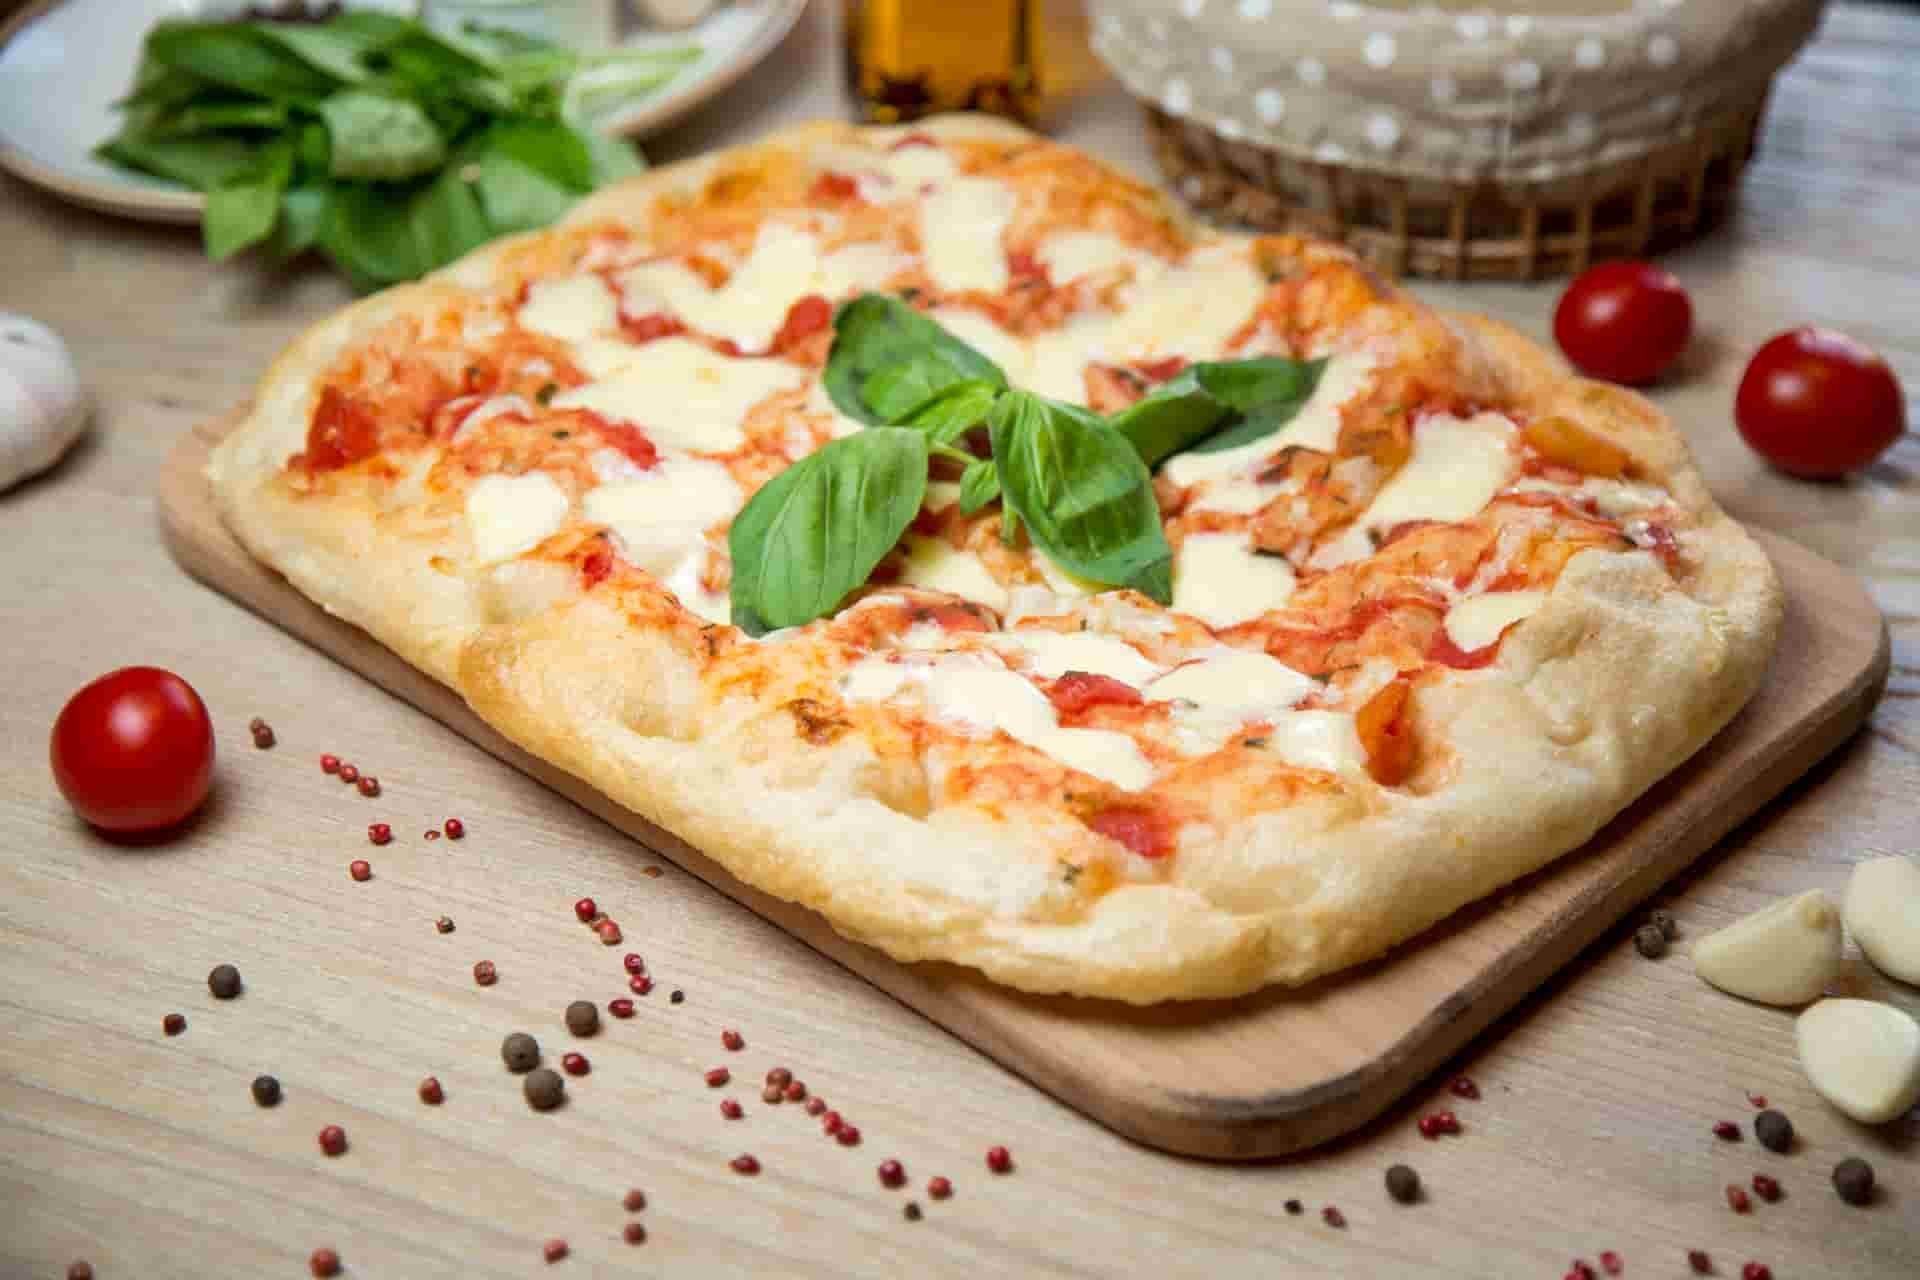 юлия высоцкая рецепт теста на пиццу фото 109